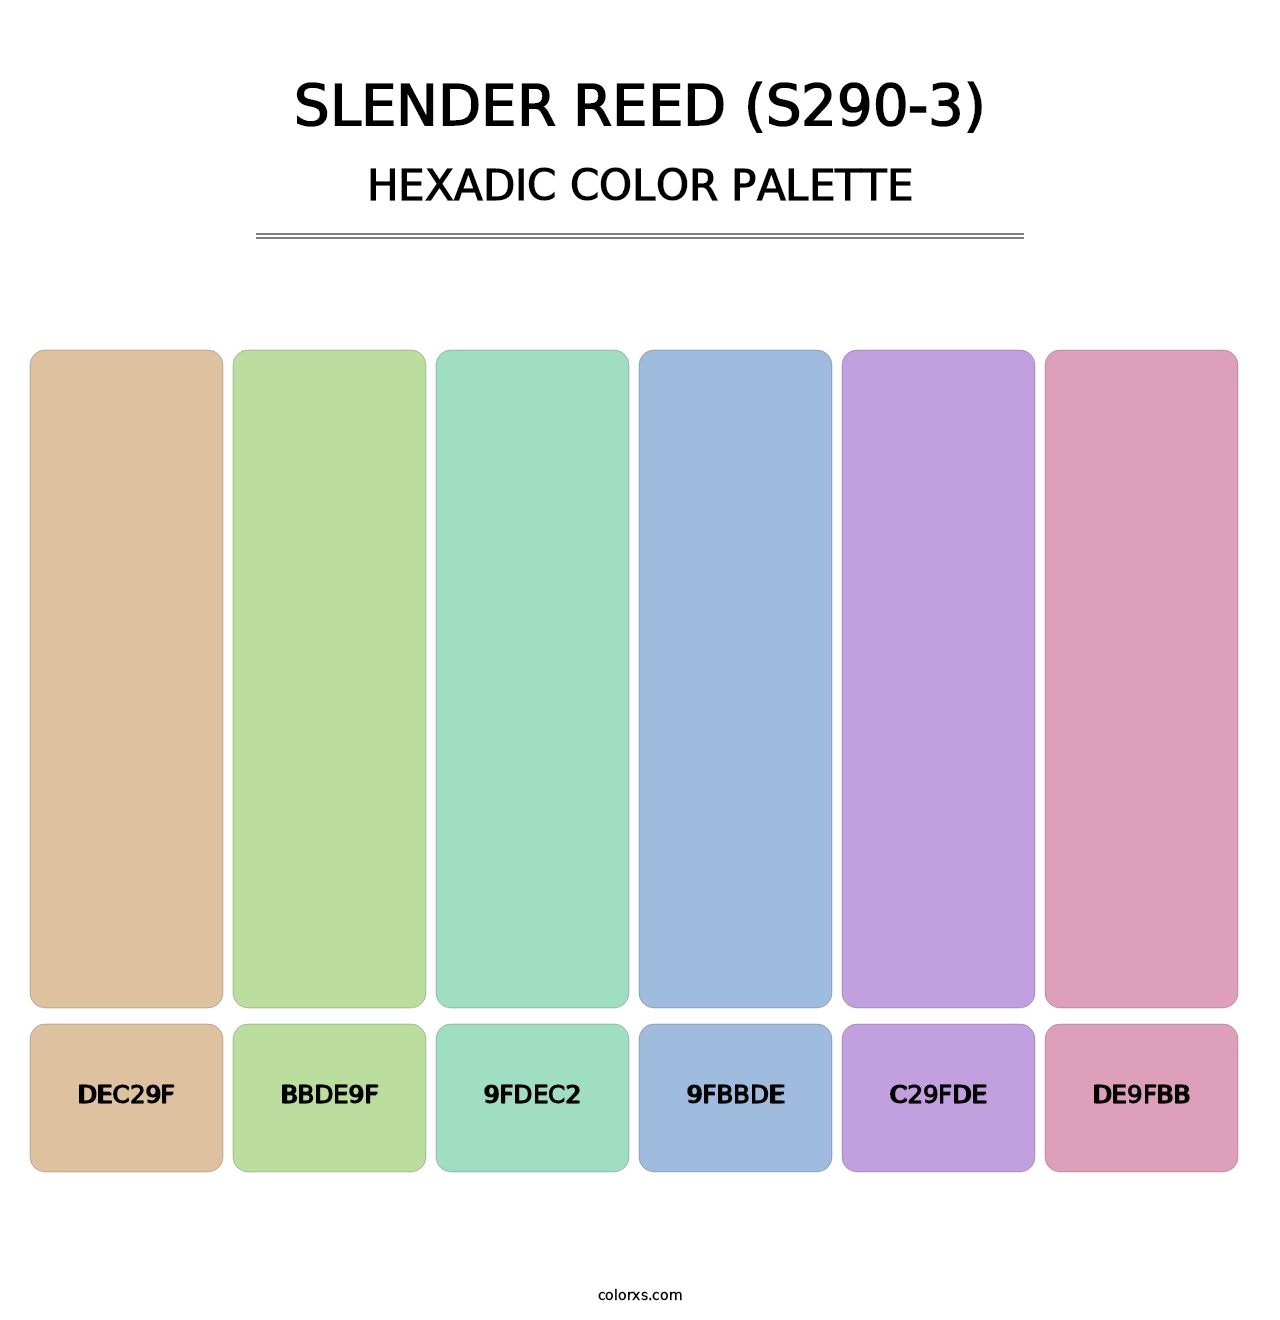 Slender Reed (S290-3) - Hexadic Color Palette